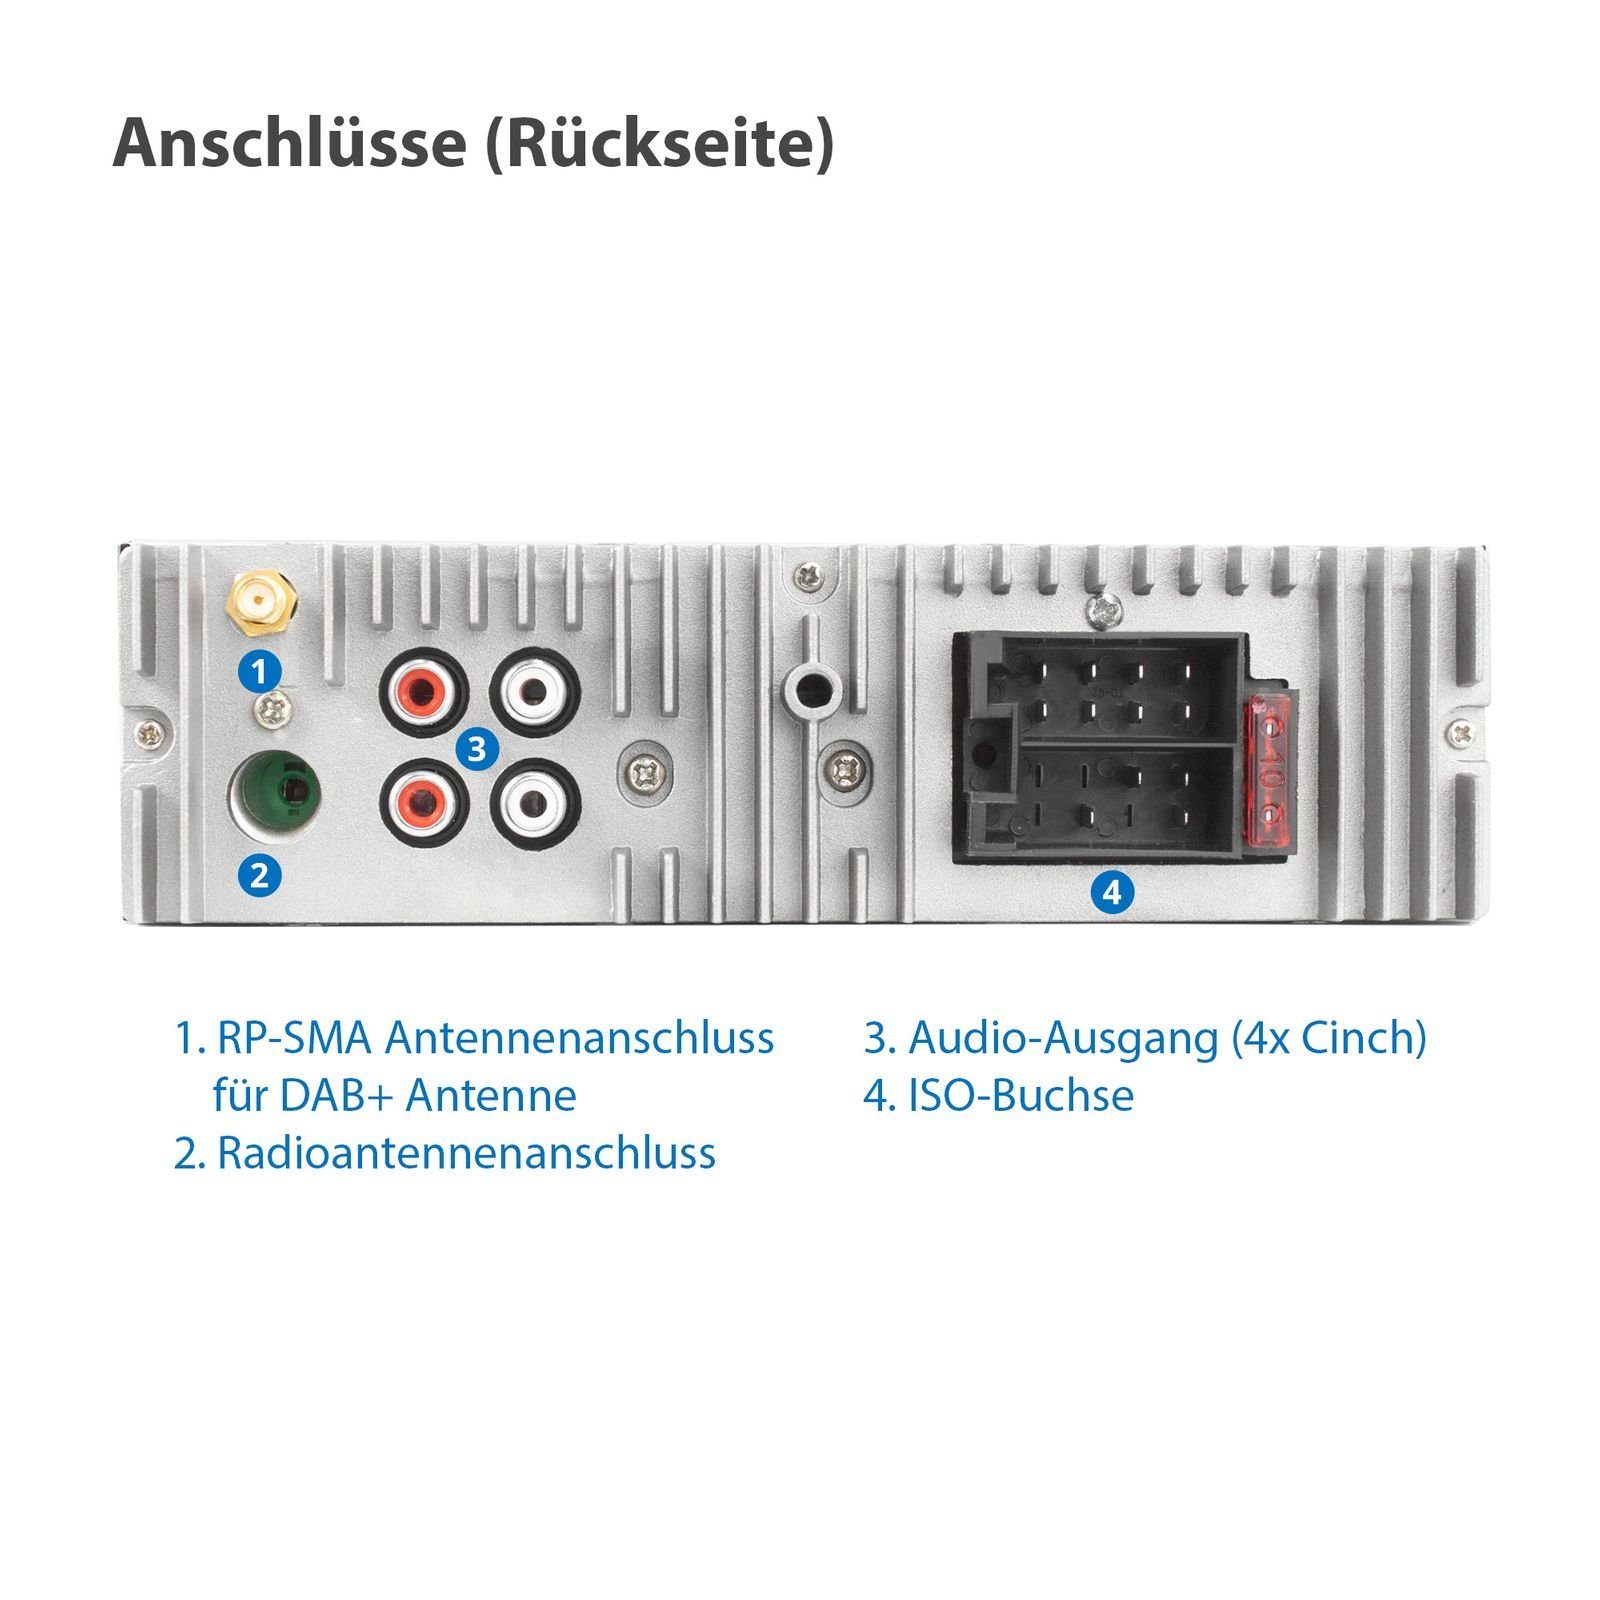 DAB+ Autoradio Bluetooth, mit Autoradio DIN SD, plus, 2x USB, AUX, 1 XM-RD283 XOMAX